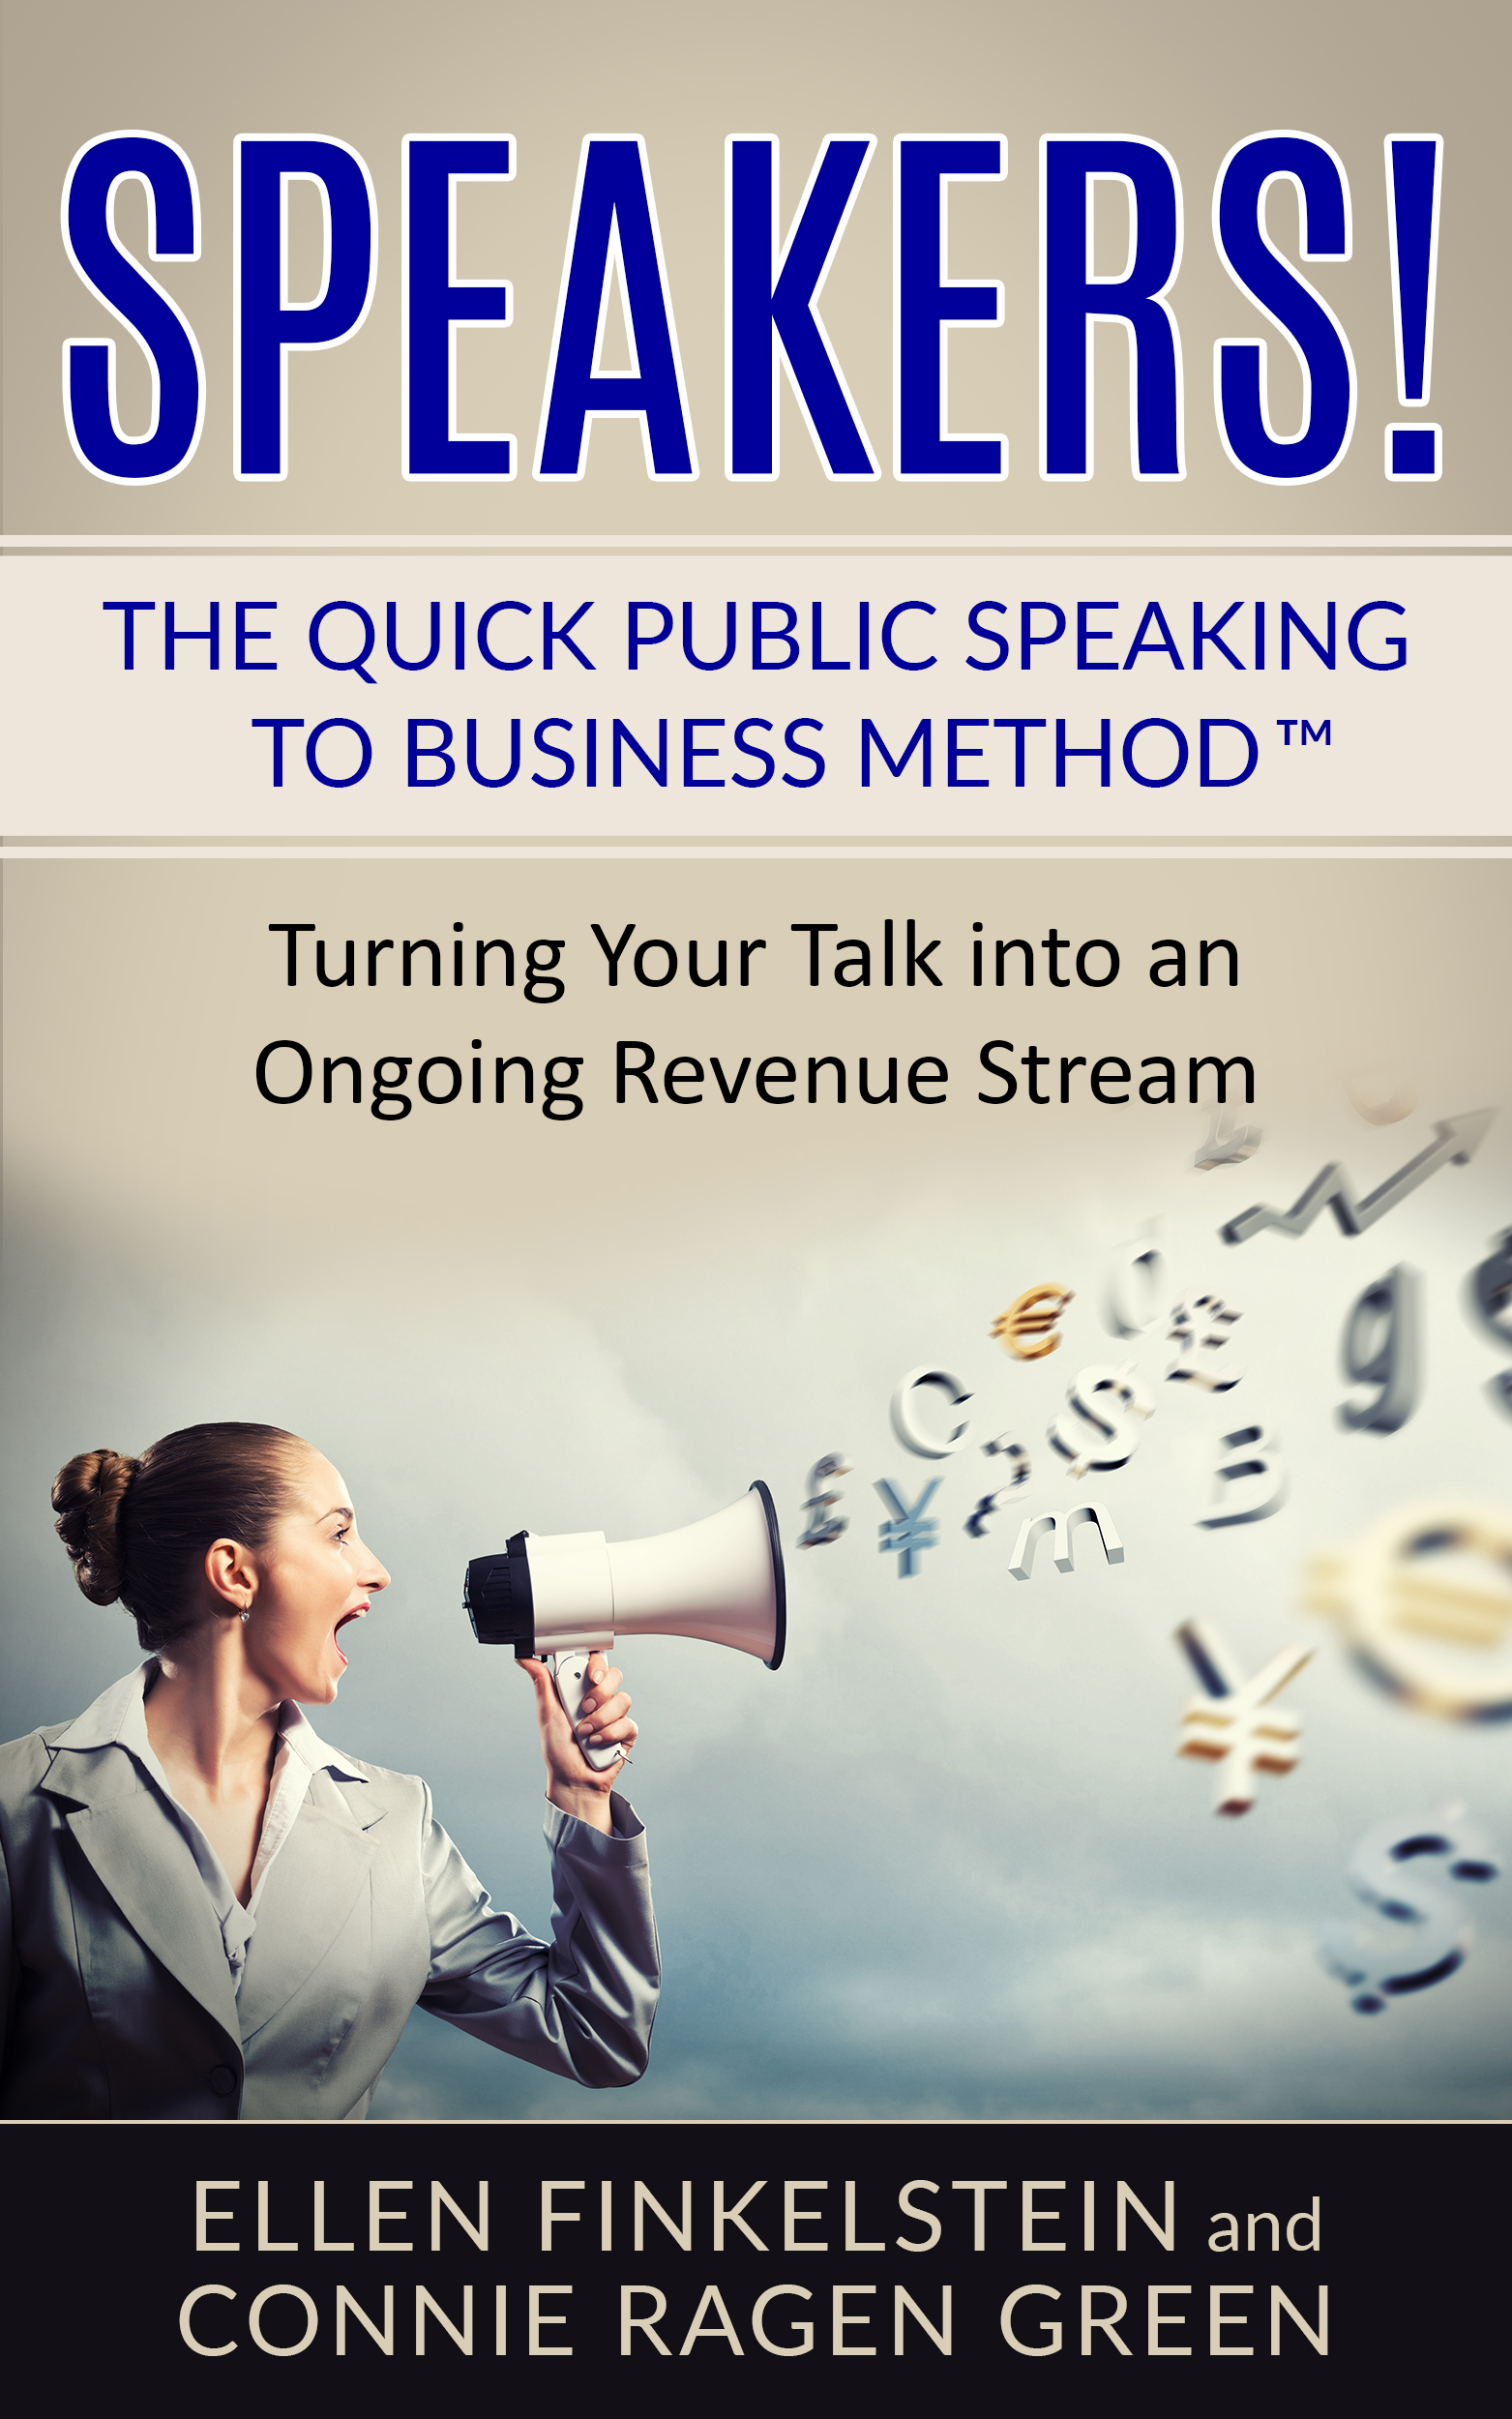 Speakers! The Quick Public Speaking to Business Method